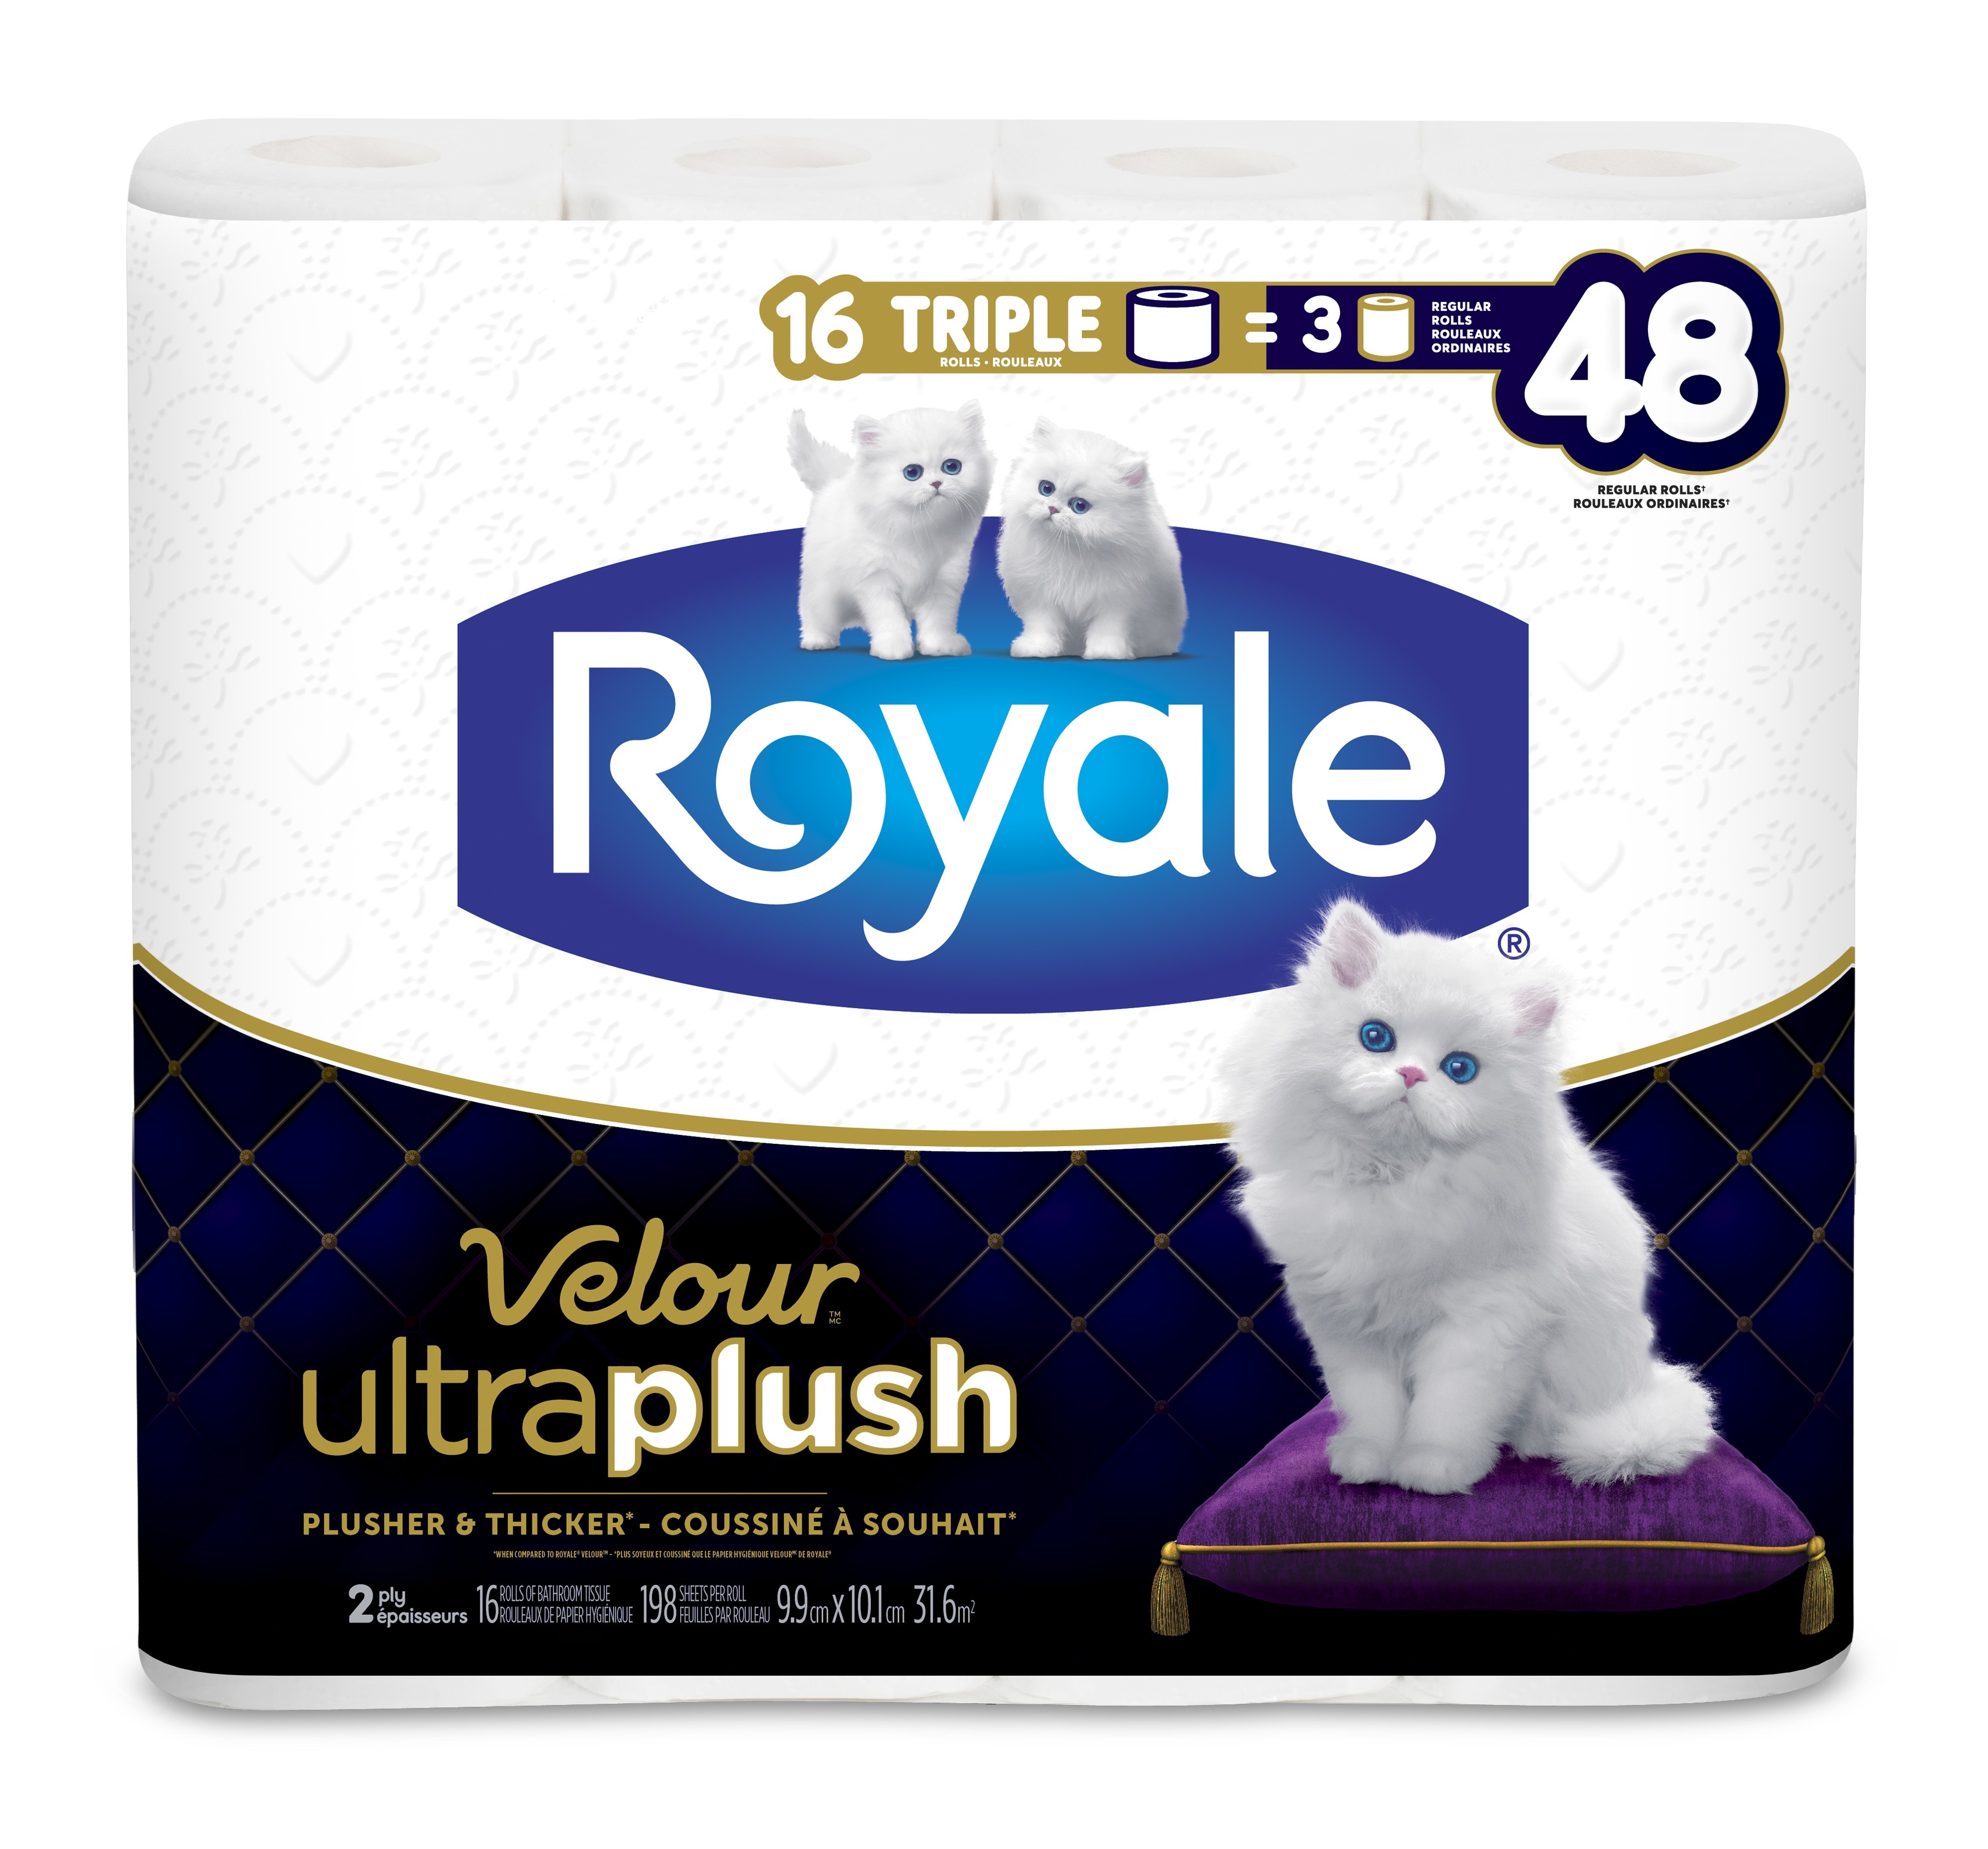 royal-ultraplush-bathroom-tissue